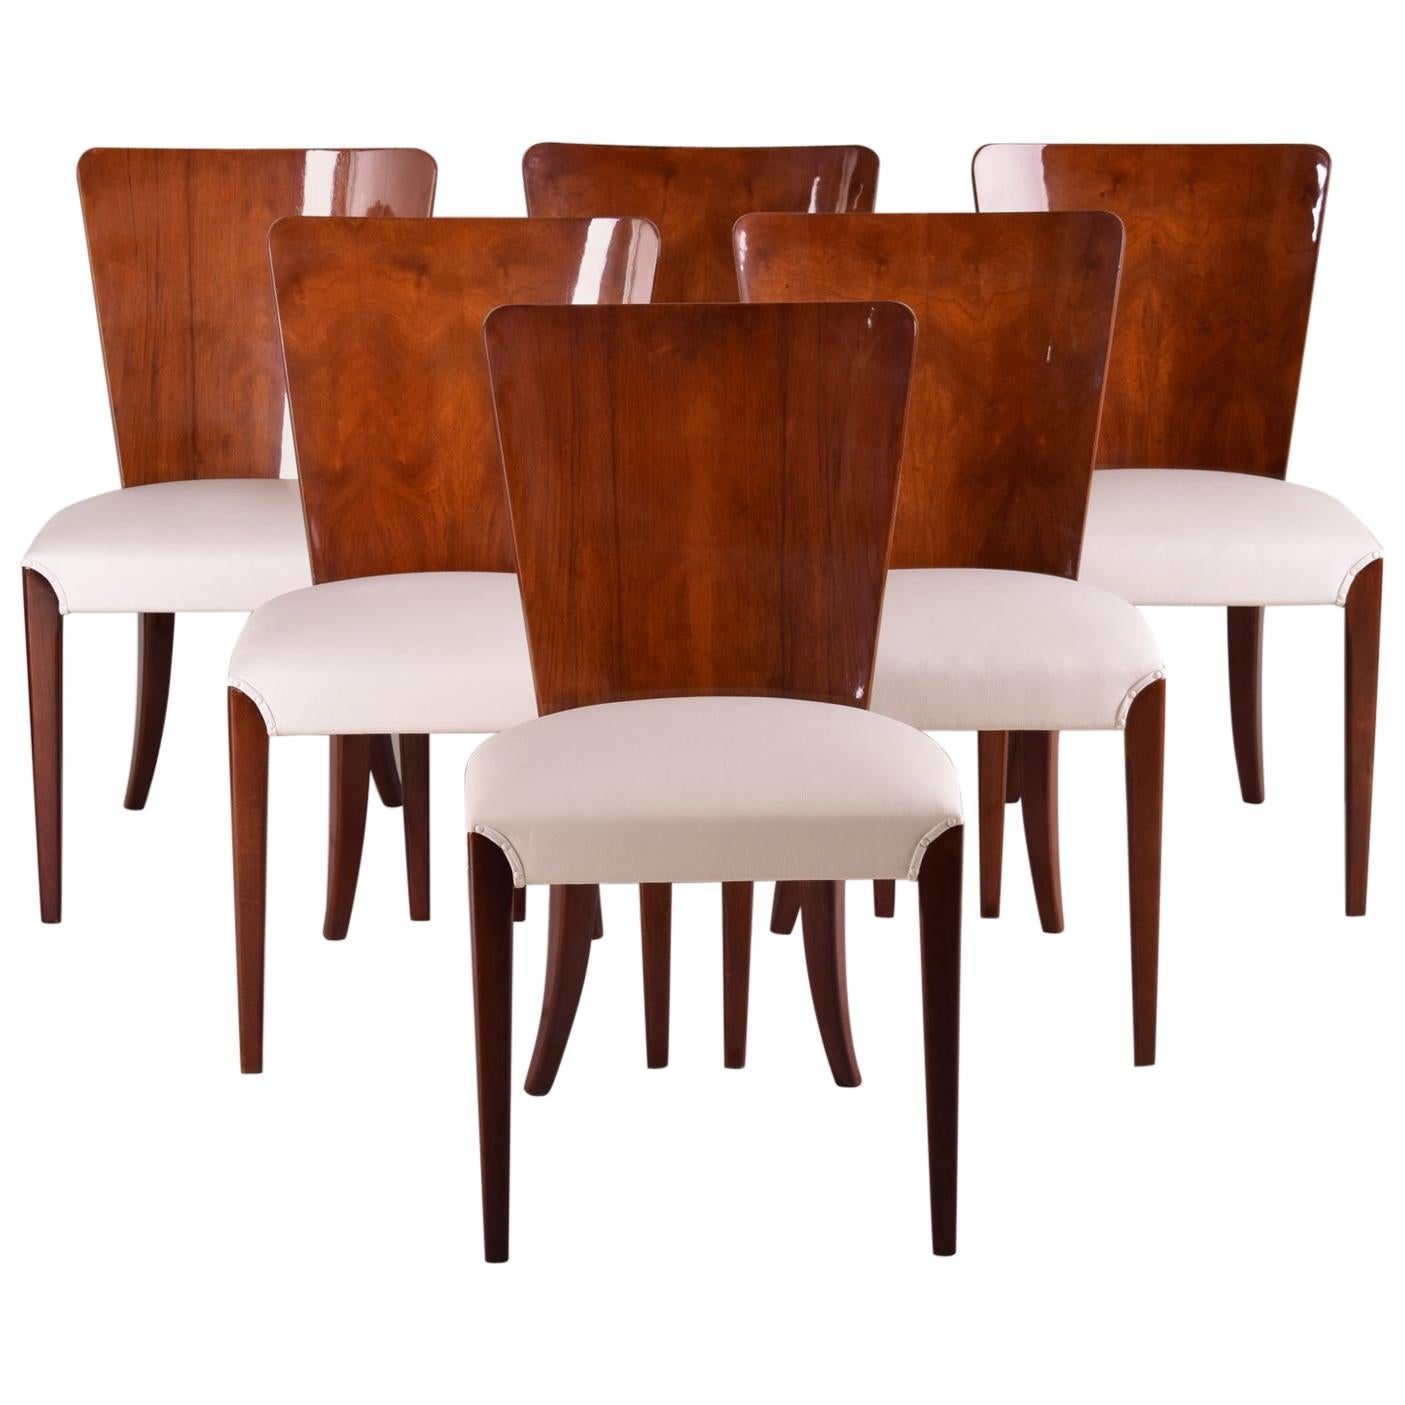 Czech Art Deco Chairs, Six Pieces, Designed by Jindrich Halabala, 1940-1949